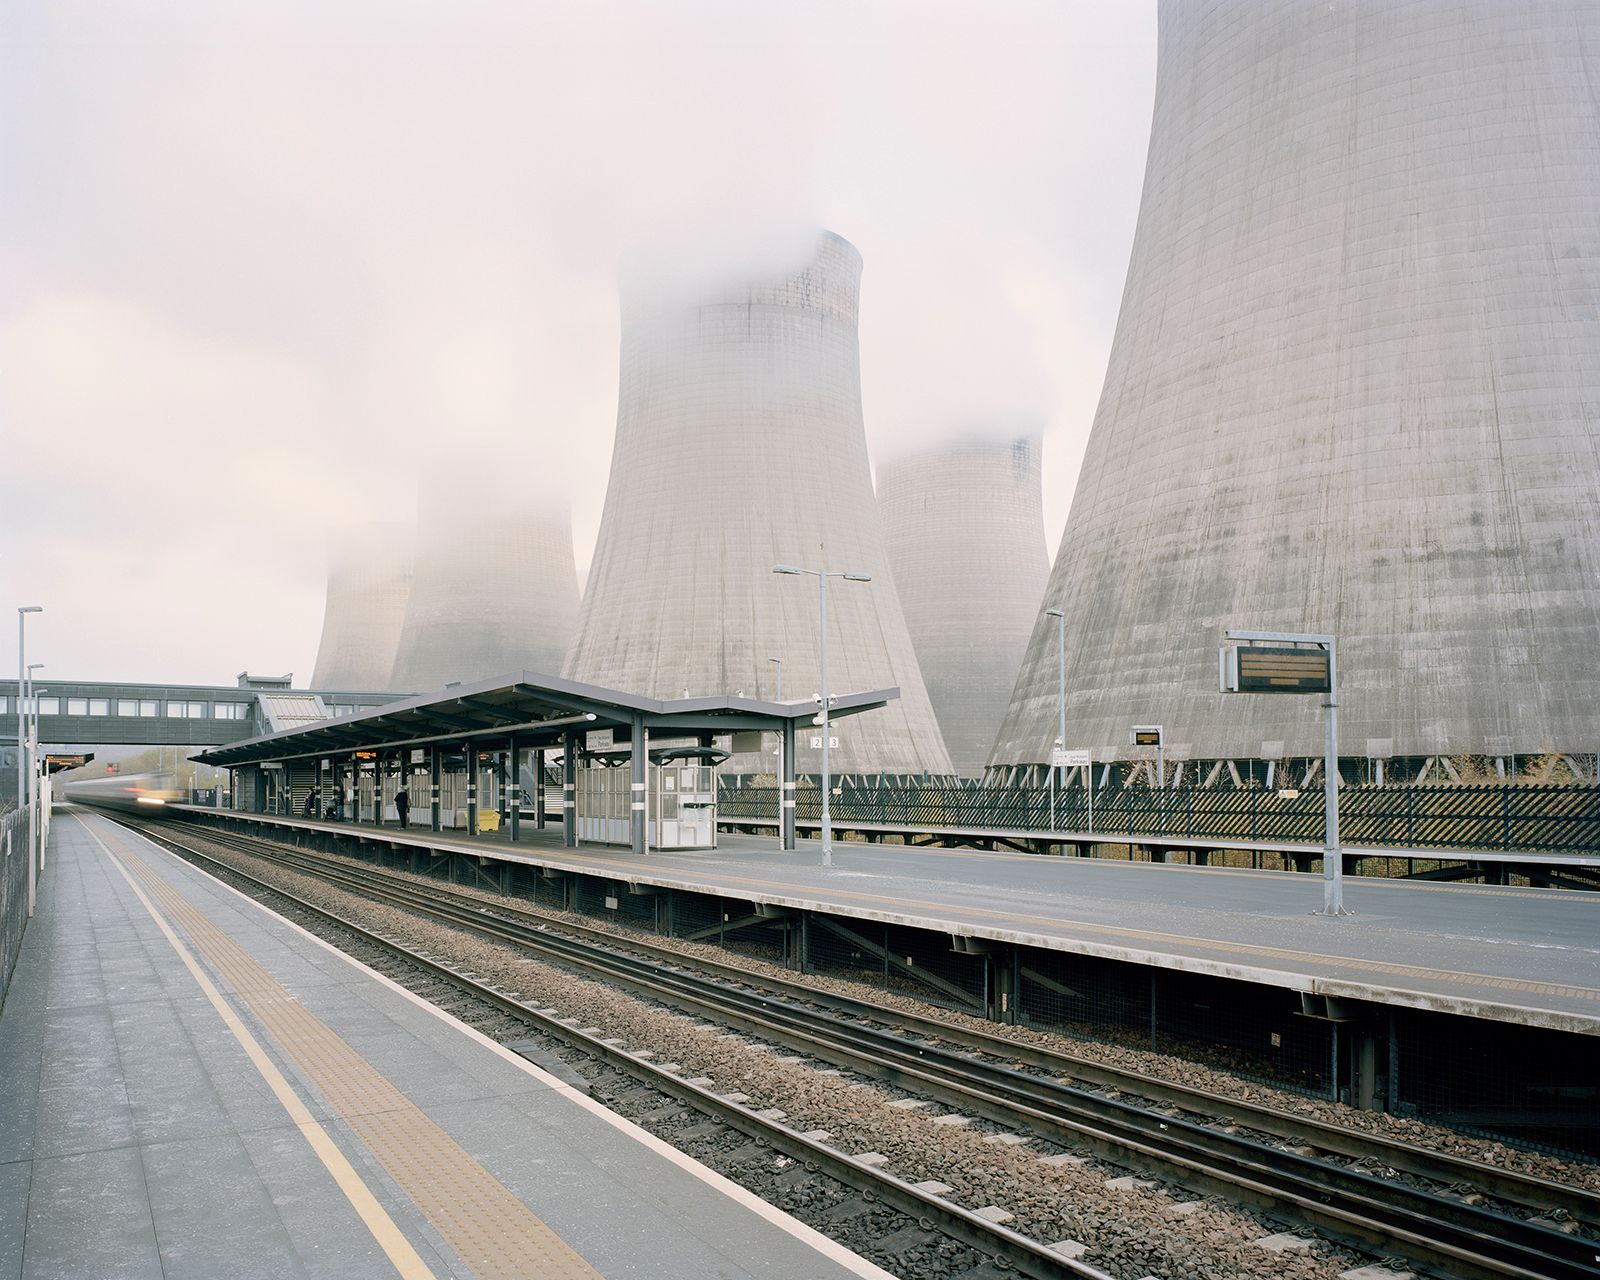 © Pietro Viti - Ratcliffe-on-Soar Power Station, Nottinghamshire, England, 2018